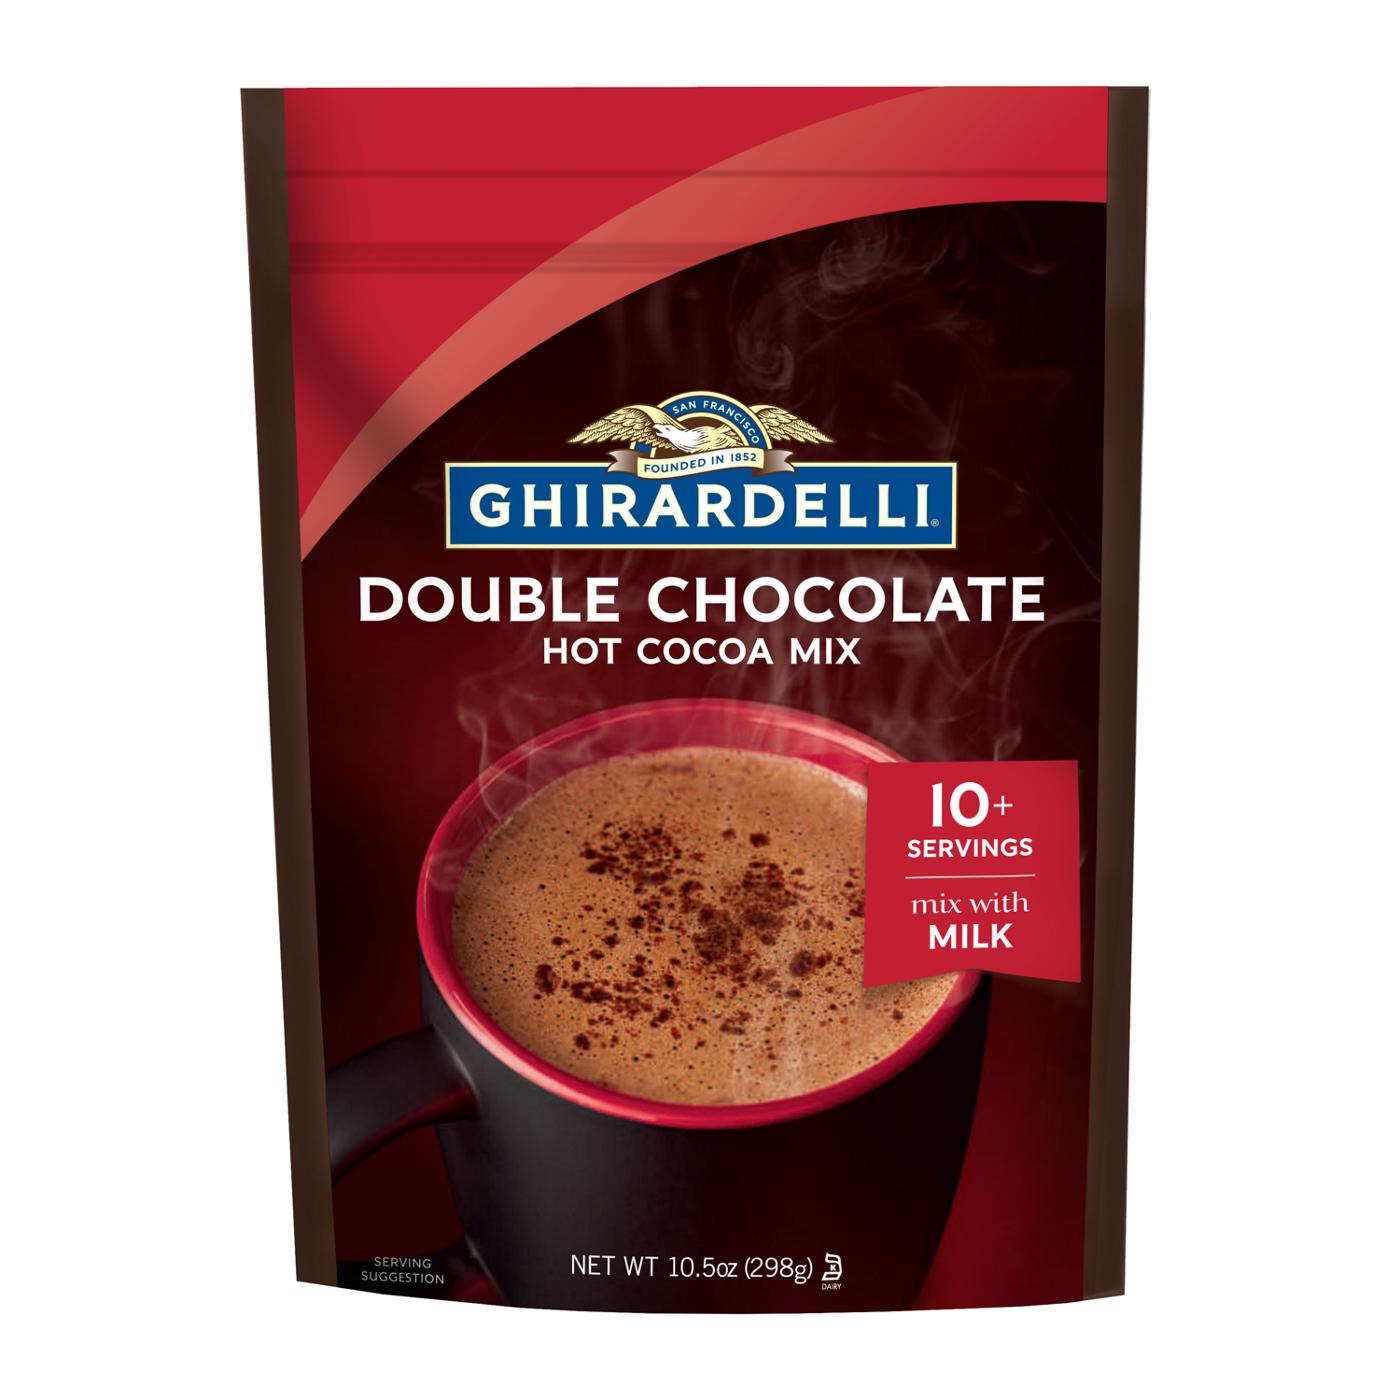 Ghirardelli Double Chocolate Premium Hot Cocoa Mix; image 1 of 7